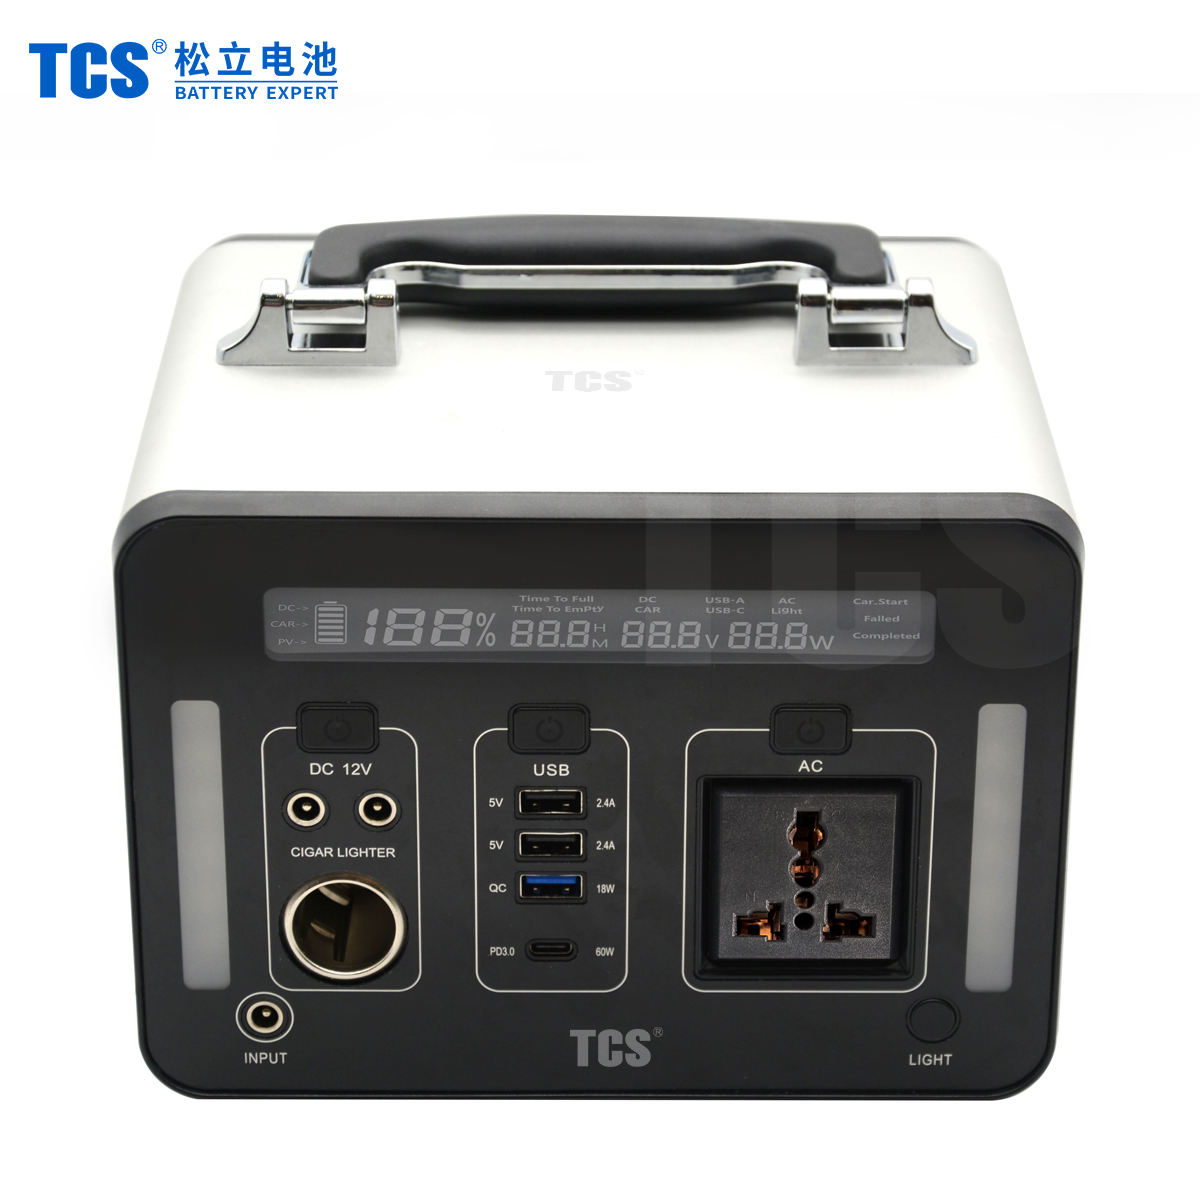 Lithium batterij draagbare voeding apparaat T500 TCS batterij